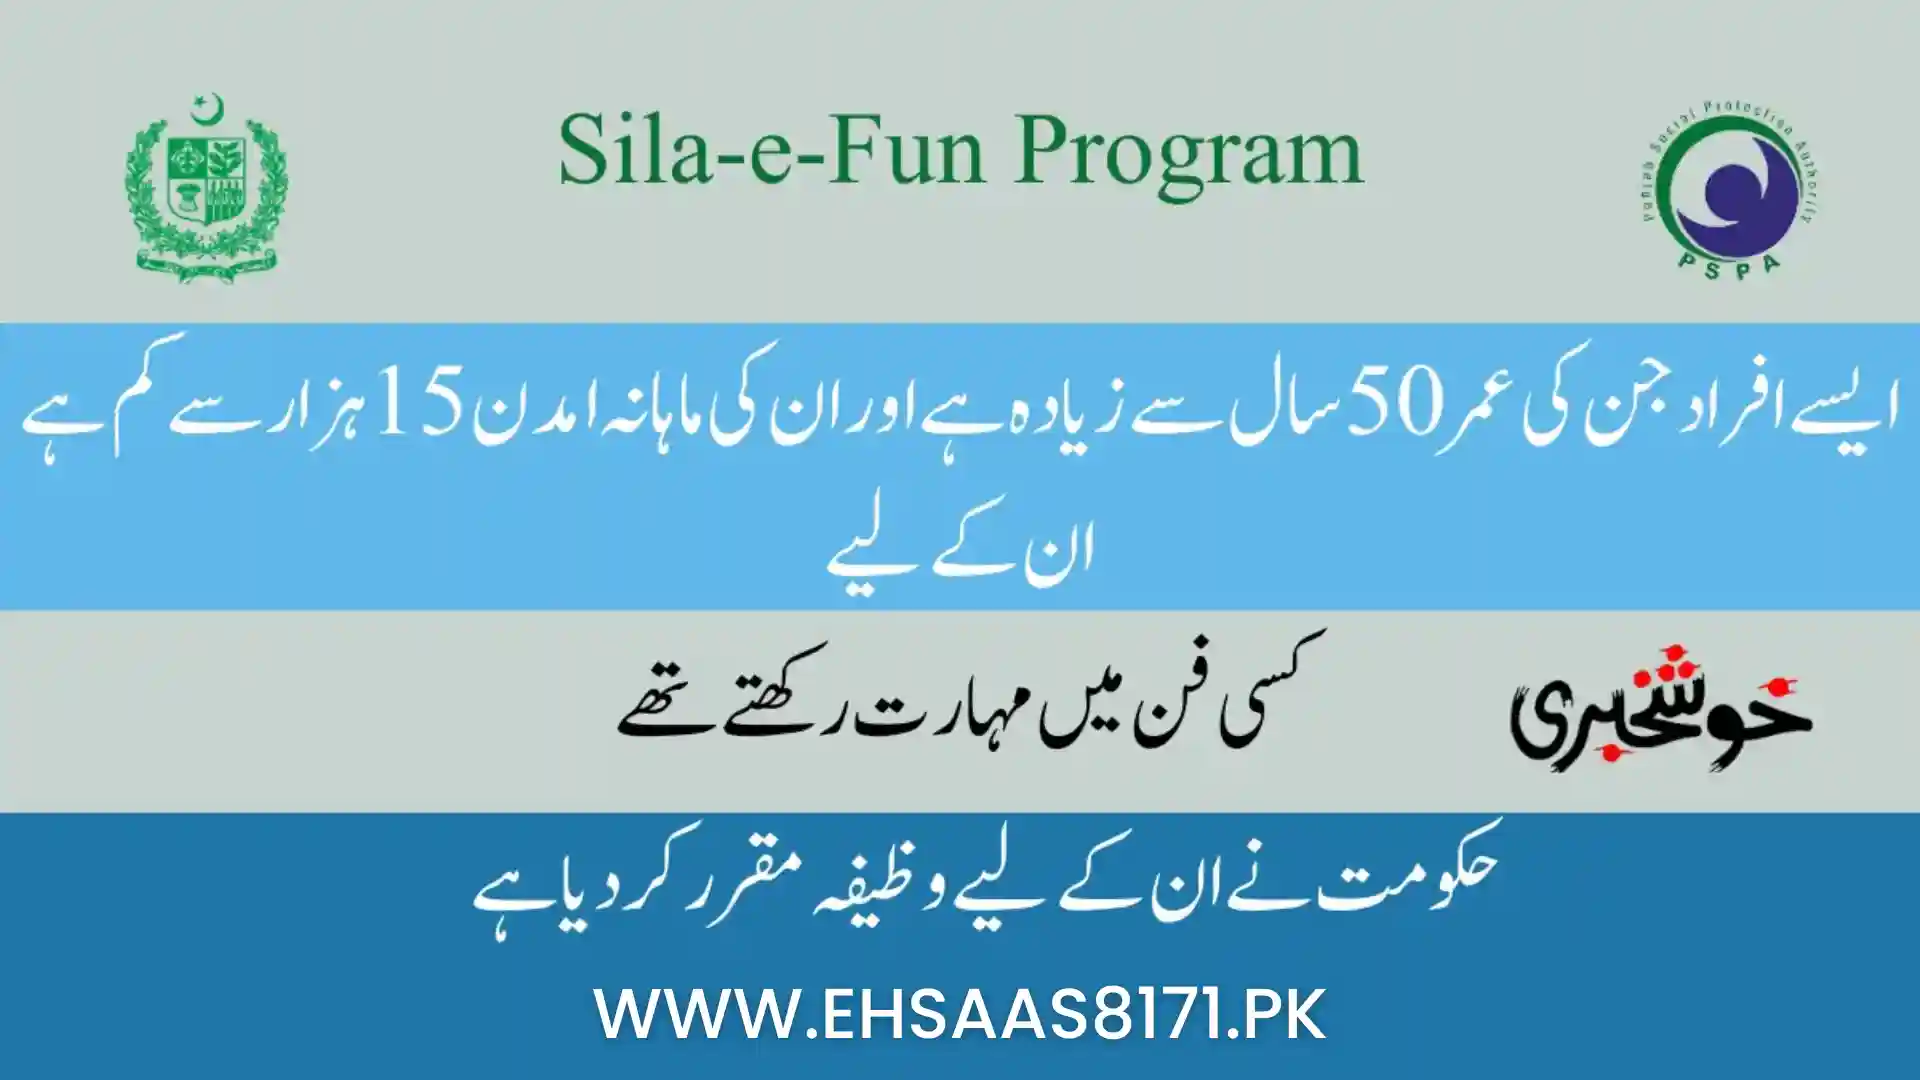 Sila-e-Fun Program Online Registration